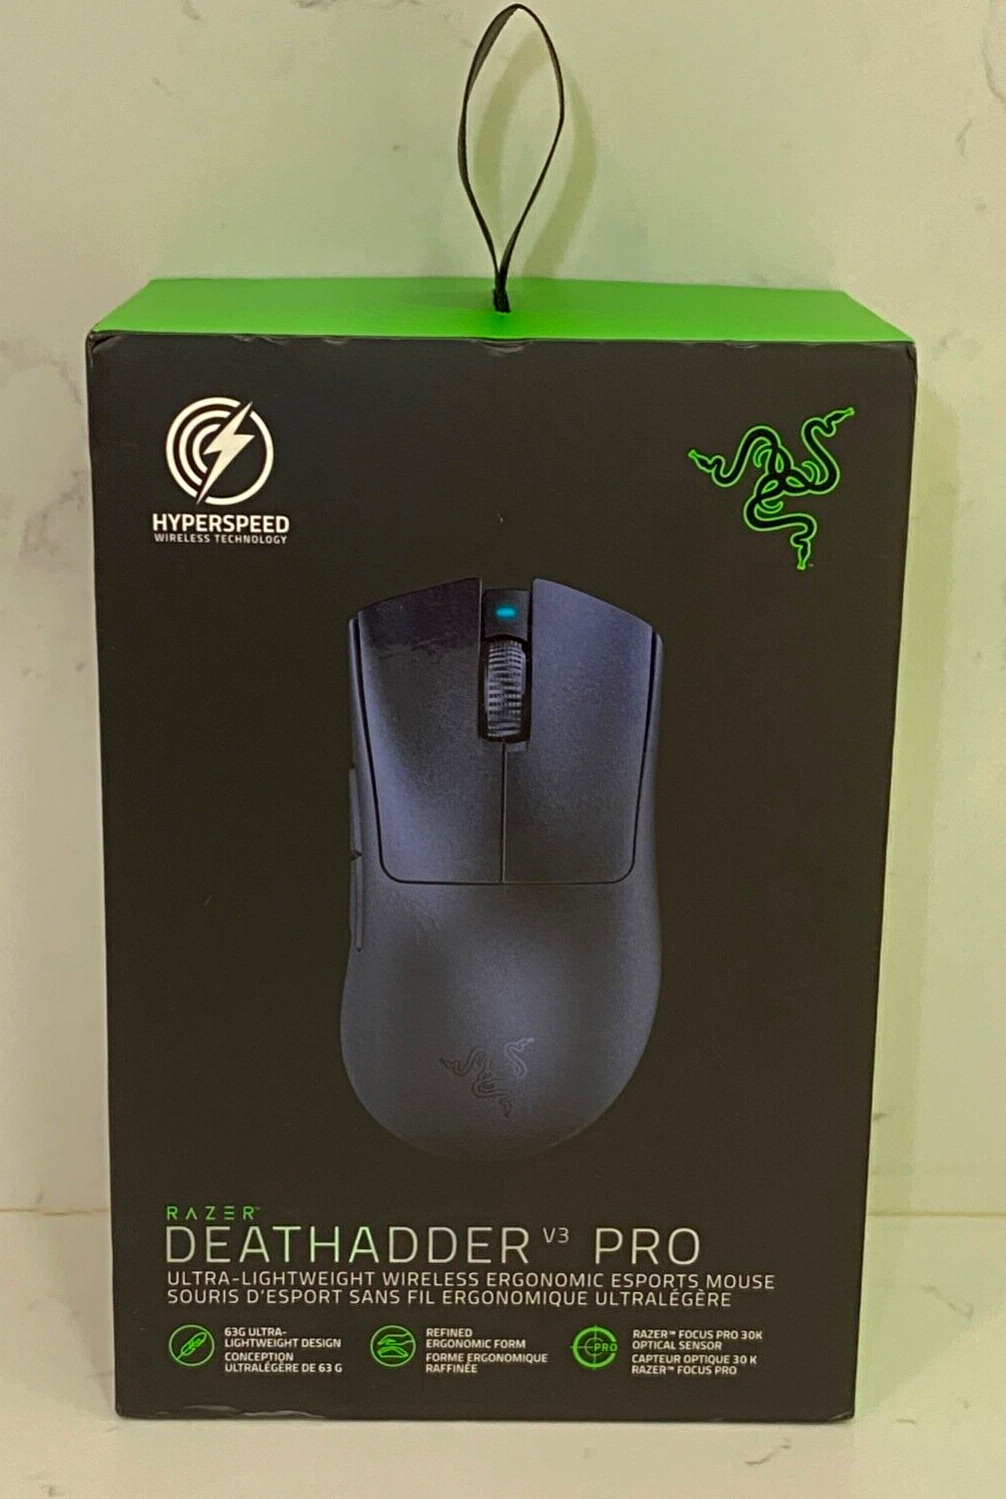 RAZER - DEATHADDER V3 PRO - Ultra-Lightweight Wireless Ergonomic Esports Mouse